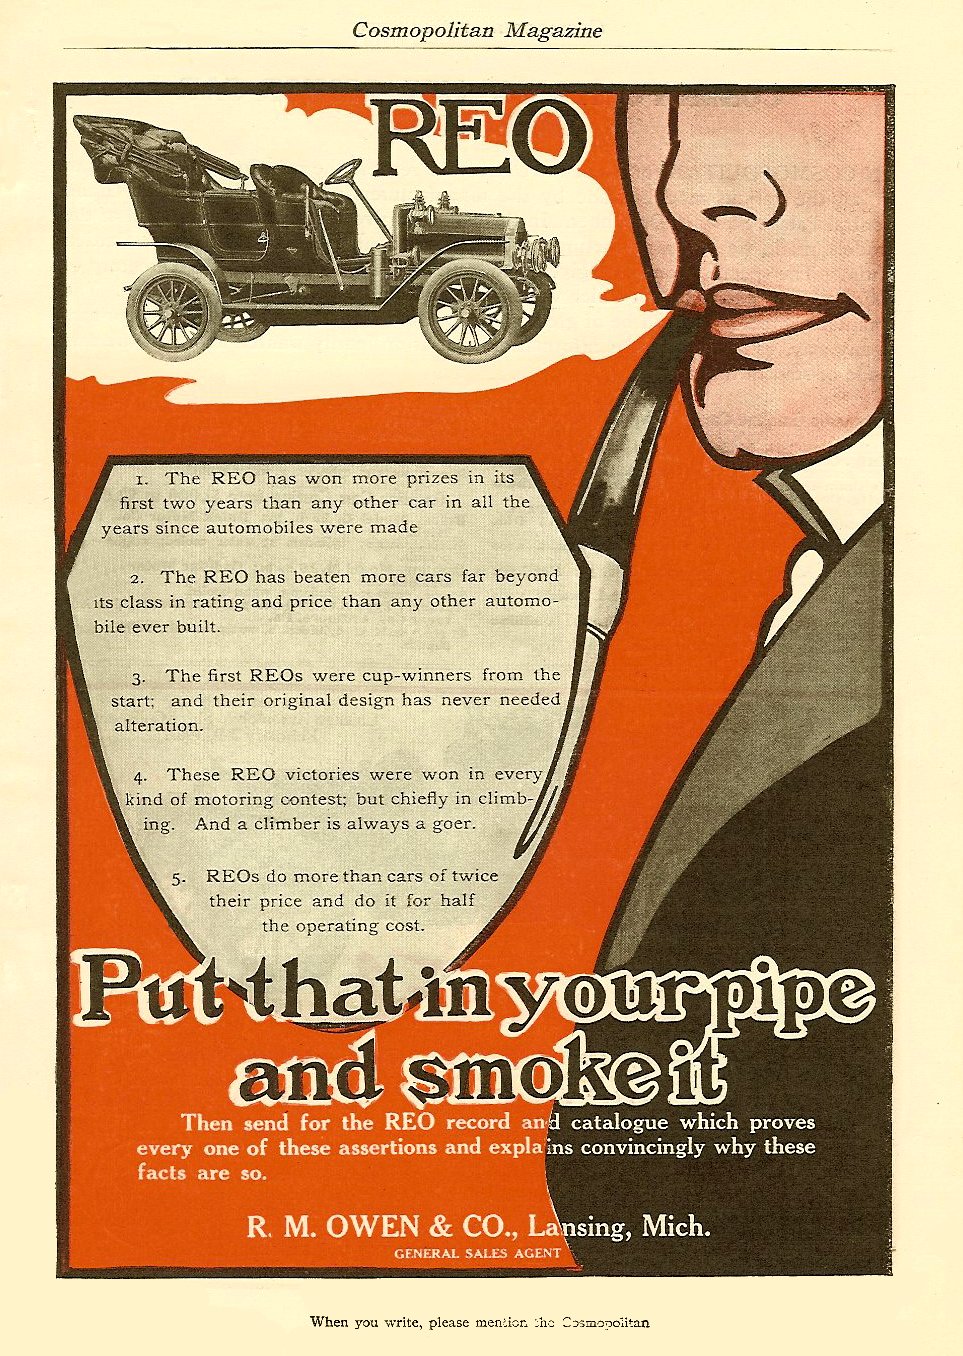 1907 American Auto Advertising